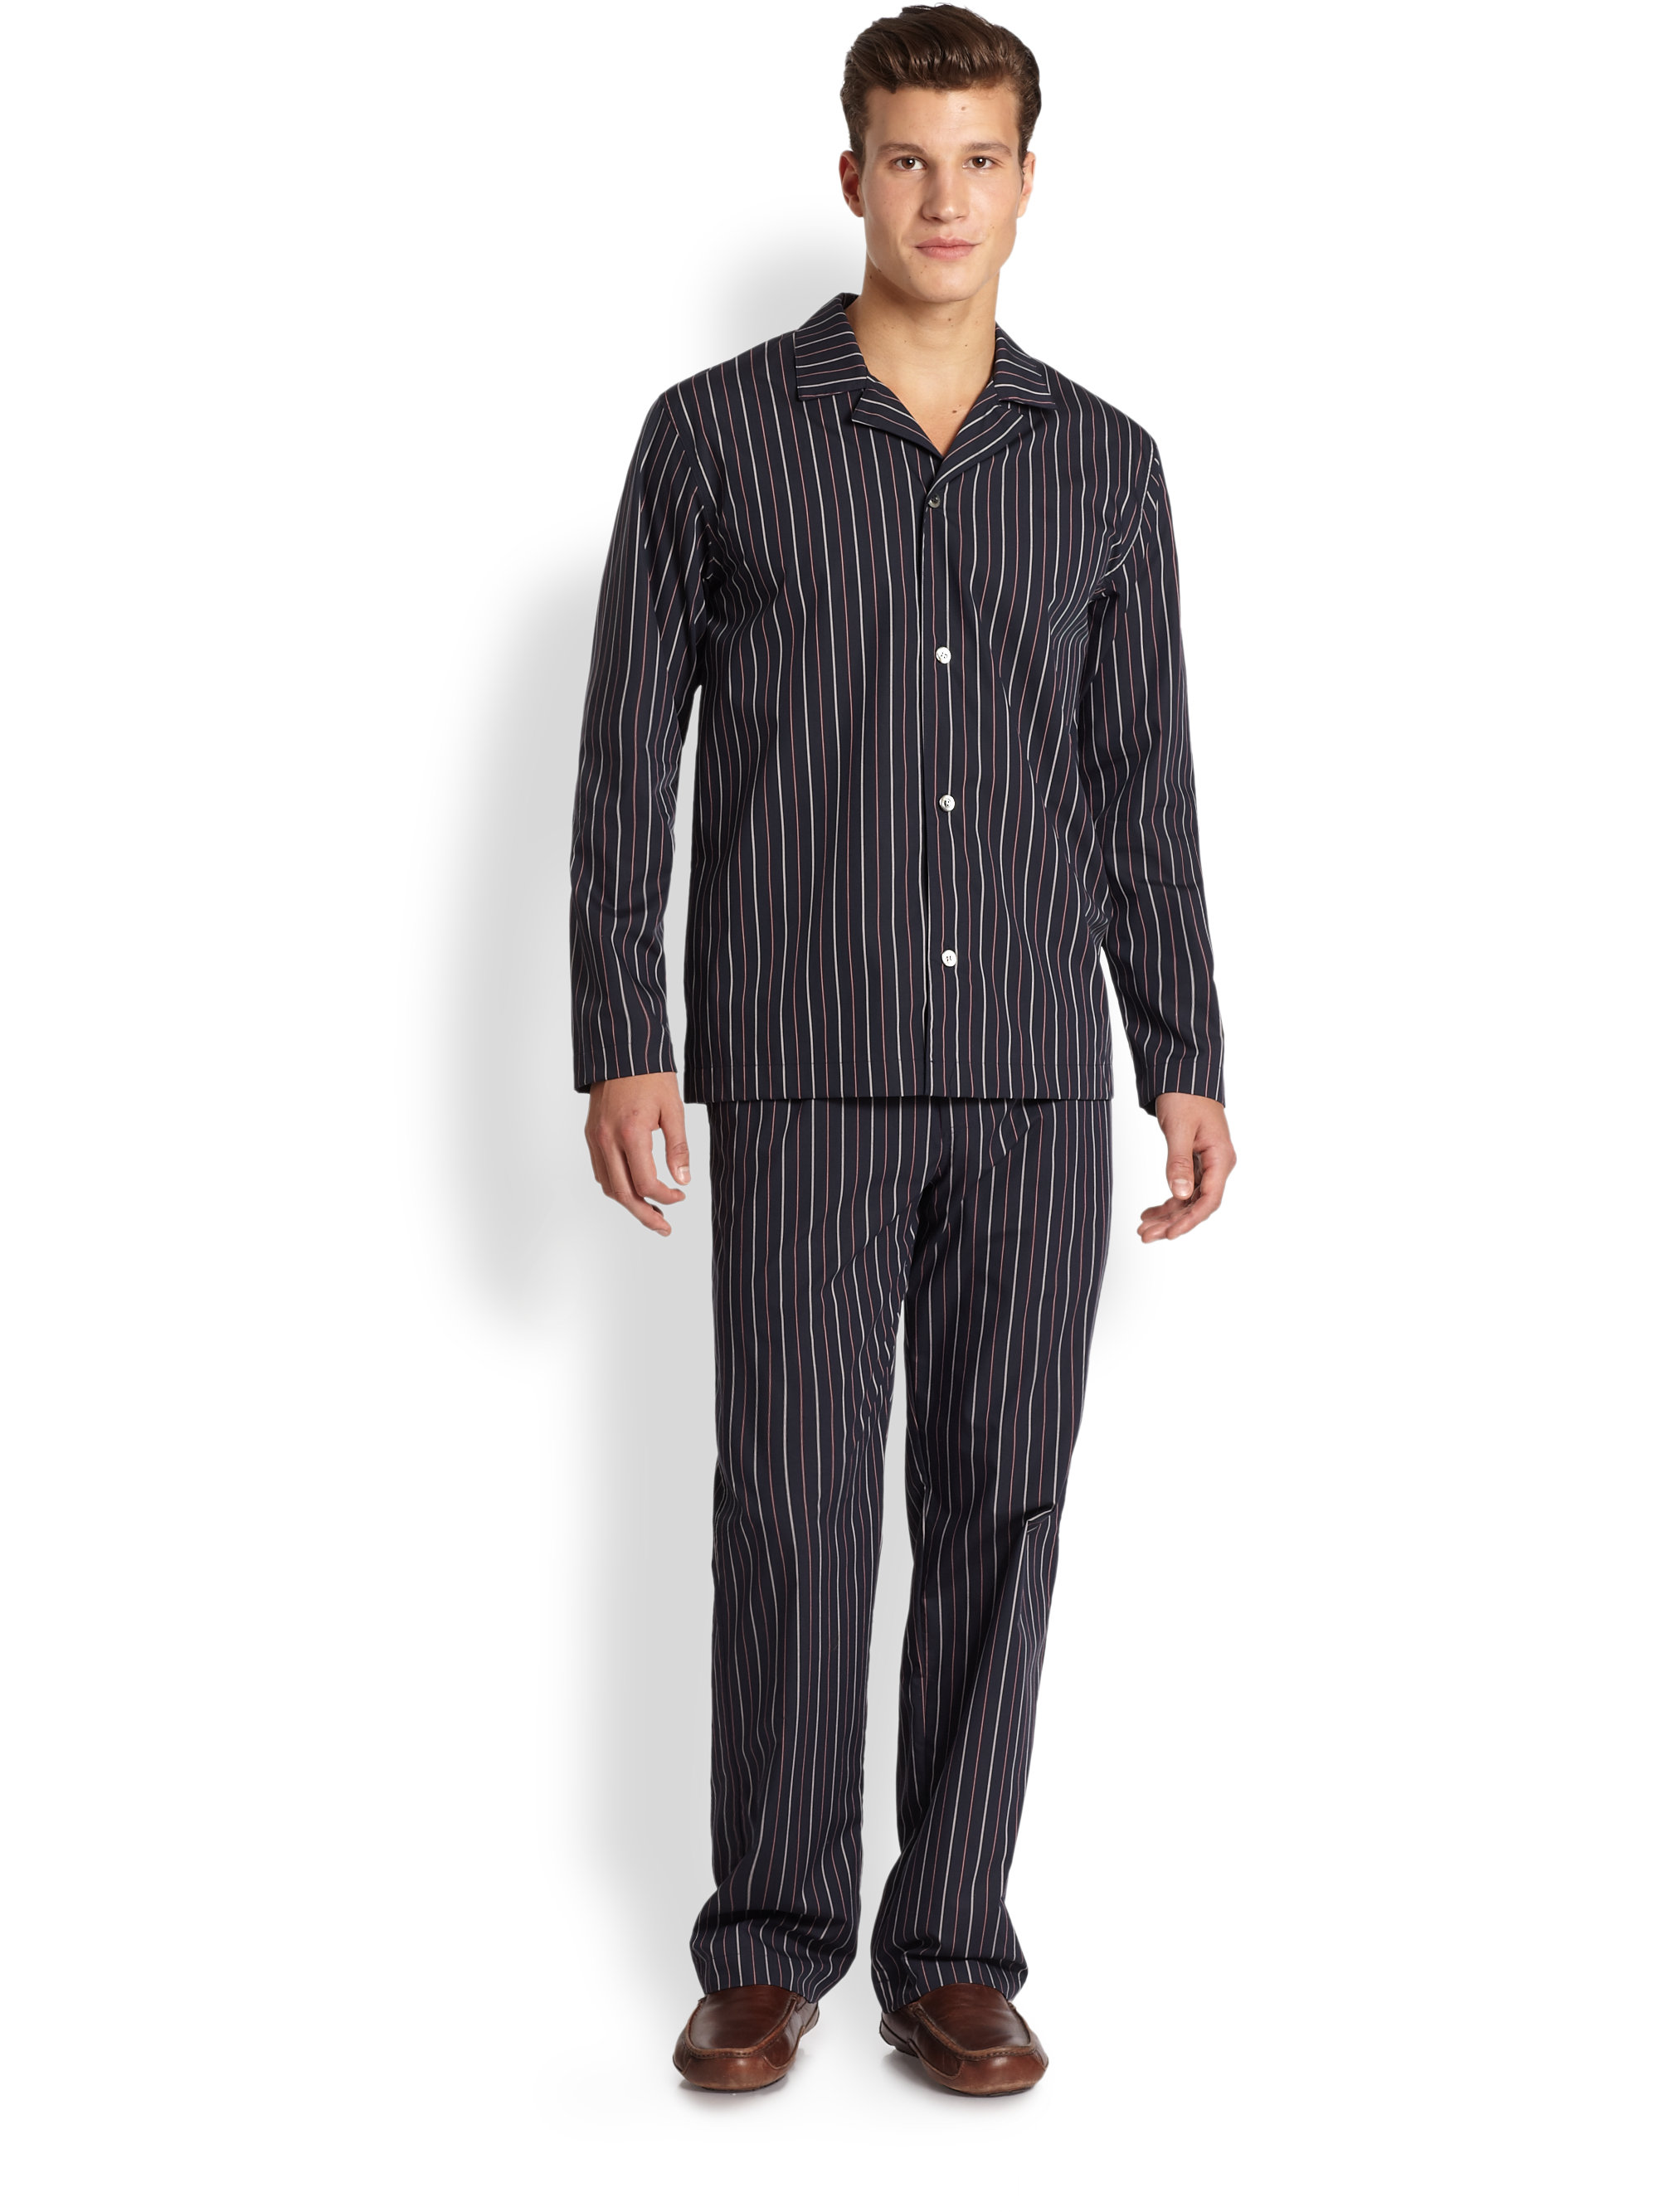 Lyst - Hanro William Striped Pajama Set in Purple for Men